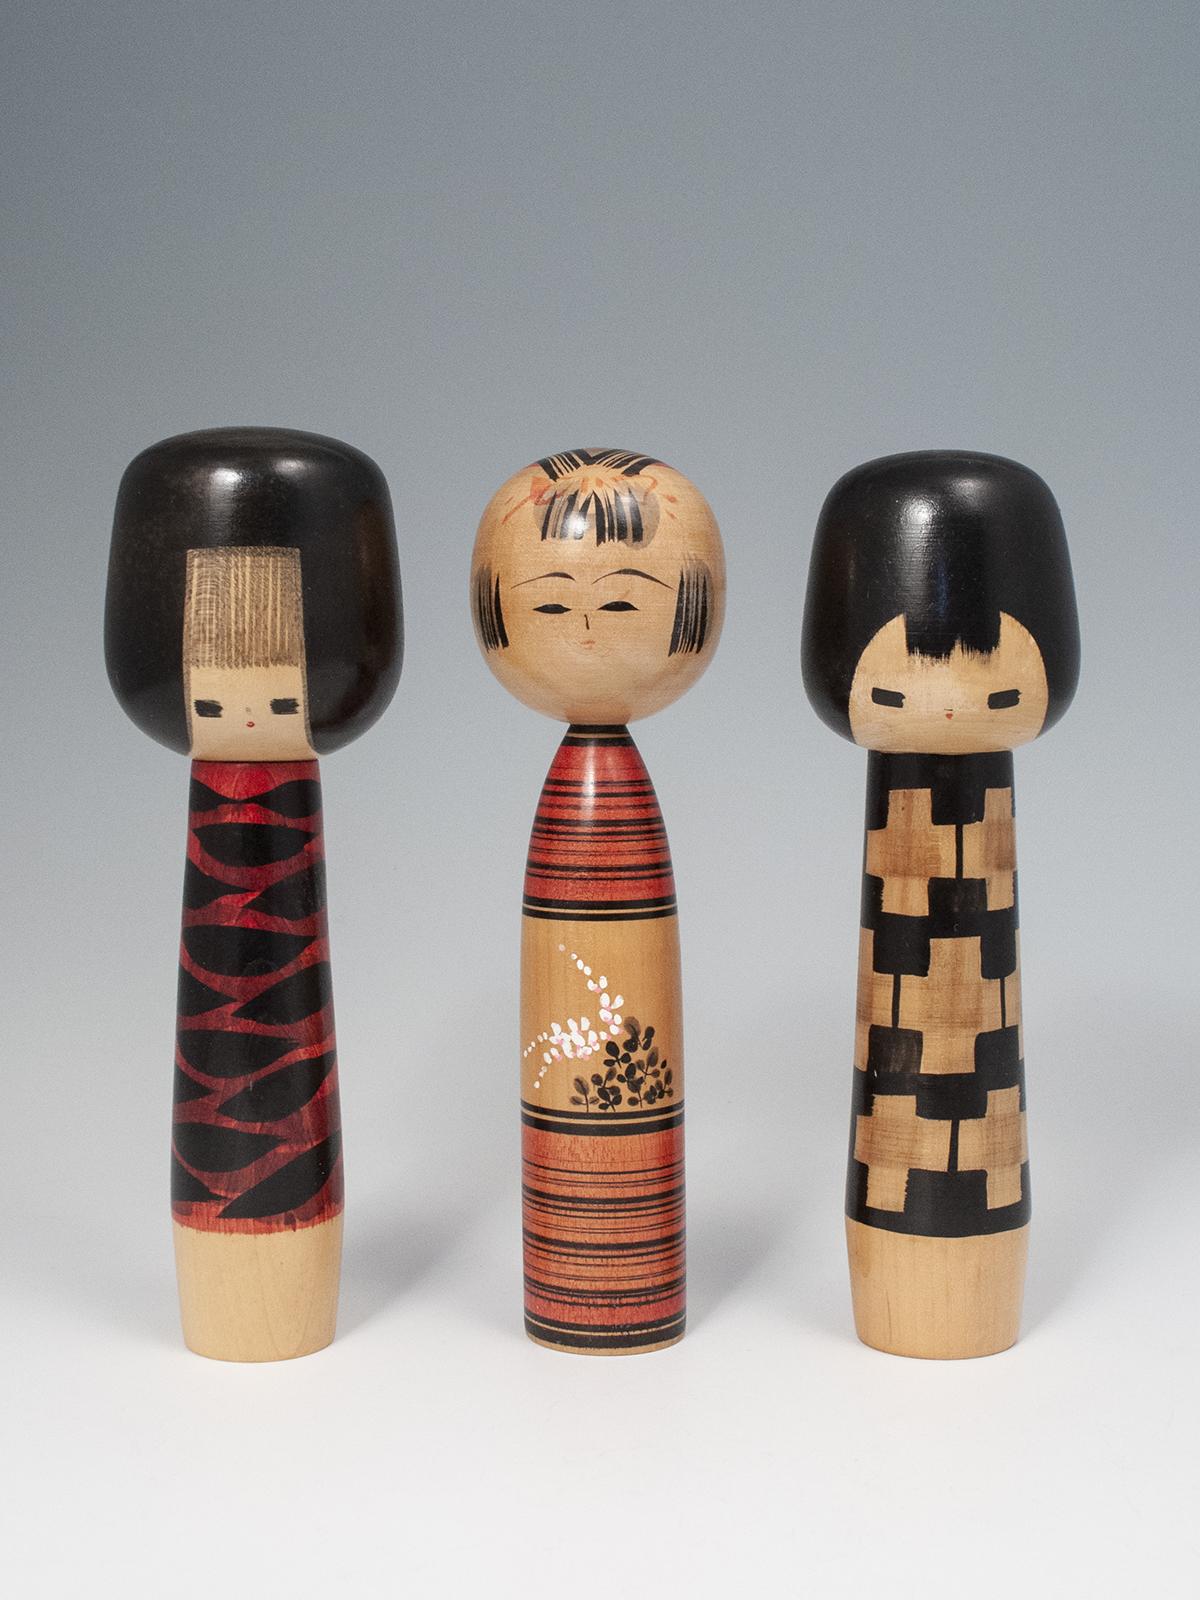 Sosaku Kokeshi dolls by Hideo Ishihara and Kichisuke Agatsuma, Japan

Two of these vintage creative kokeshi were made and signed by the award winning master, Hideo Ishihara (1929-1999). The kokeshi in the center was made and signed by Kichisuke